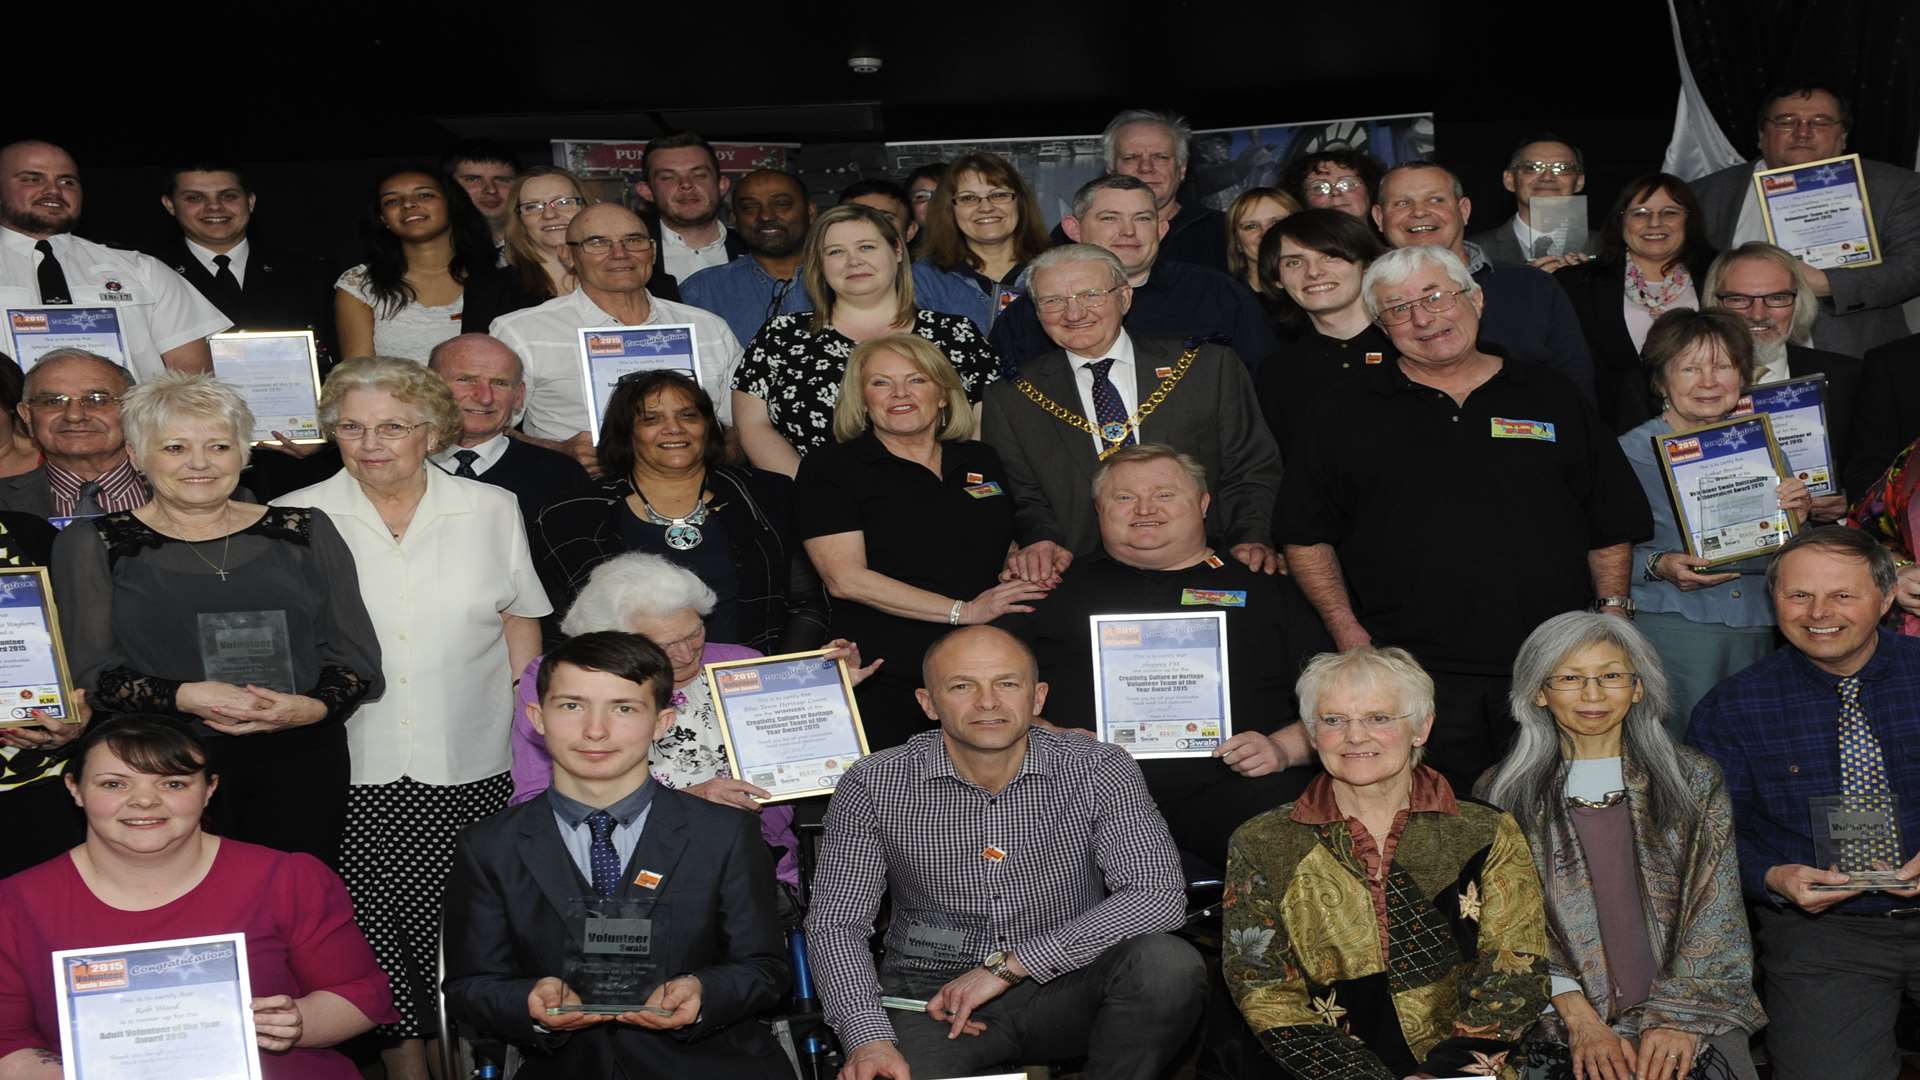 The winners of this year's Volunteer Swale Award